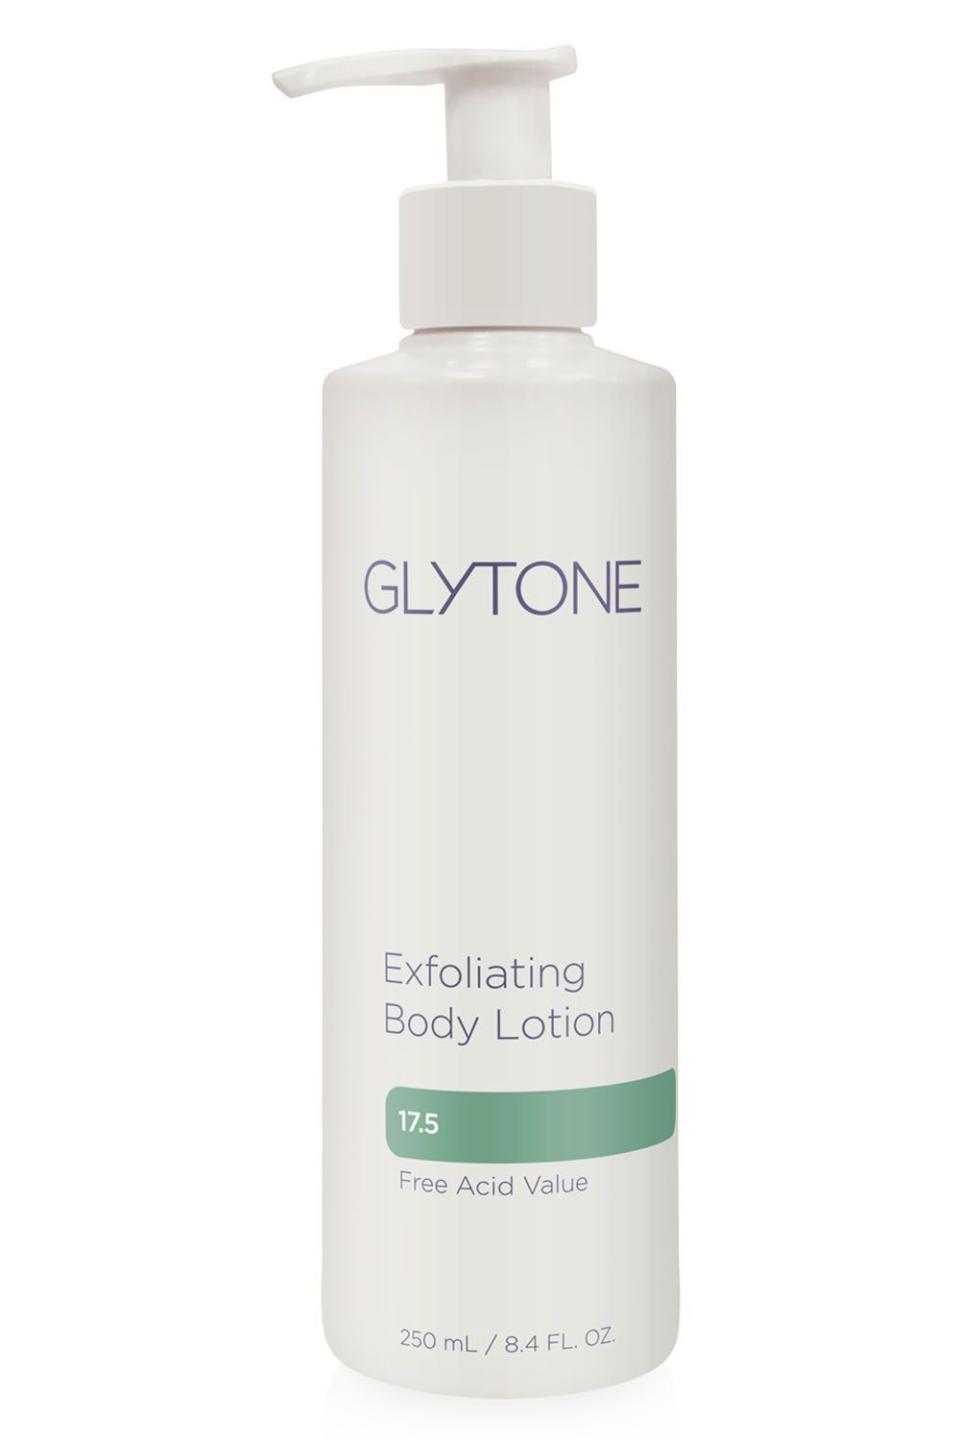 7) Glytone Exfoliating Body Lotion